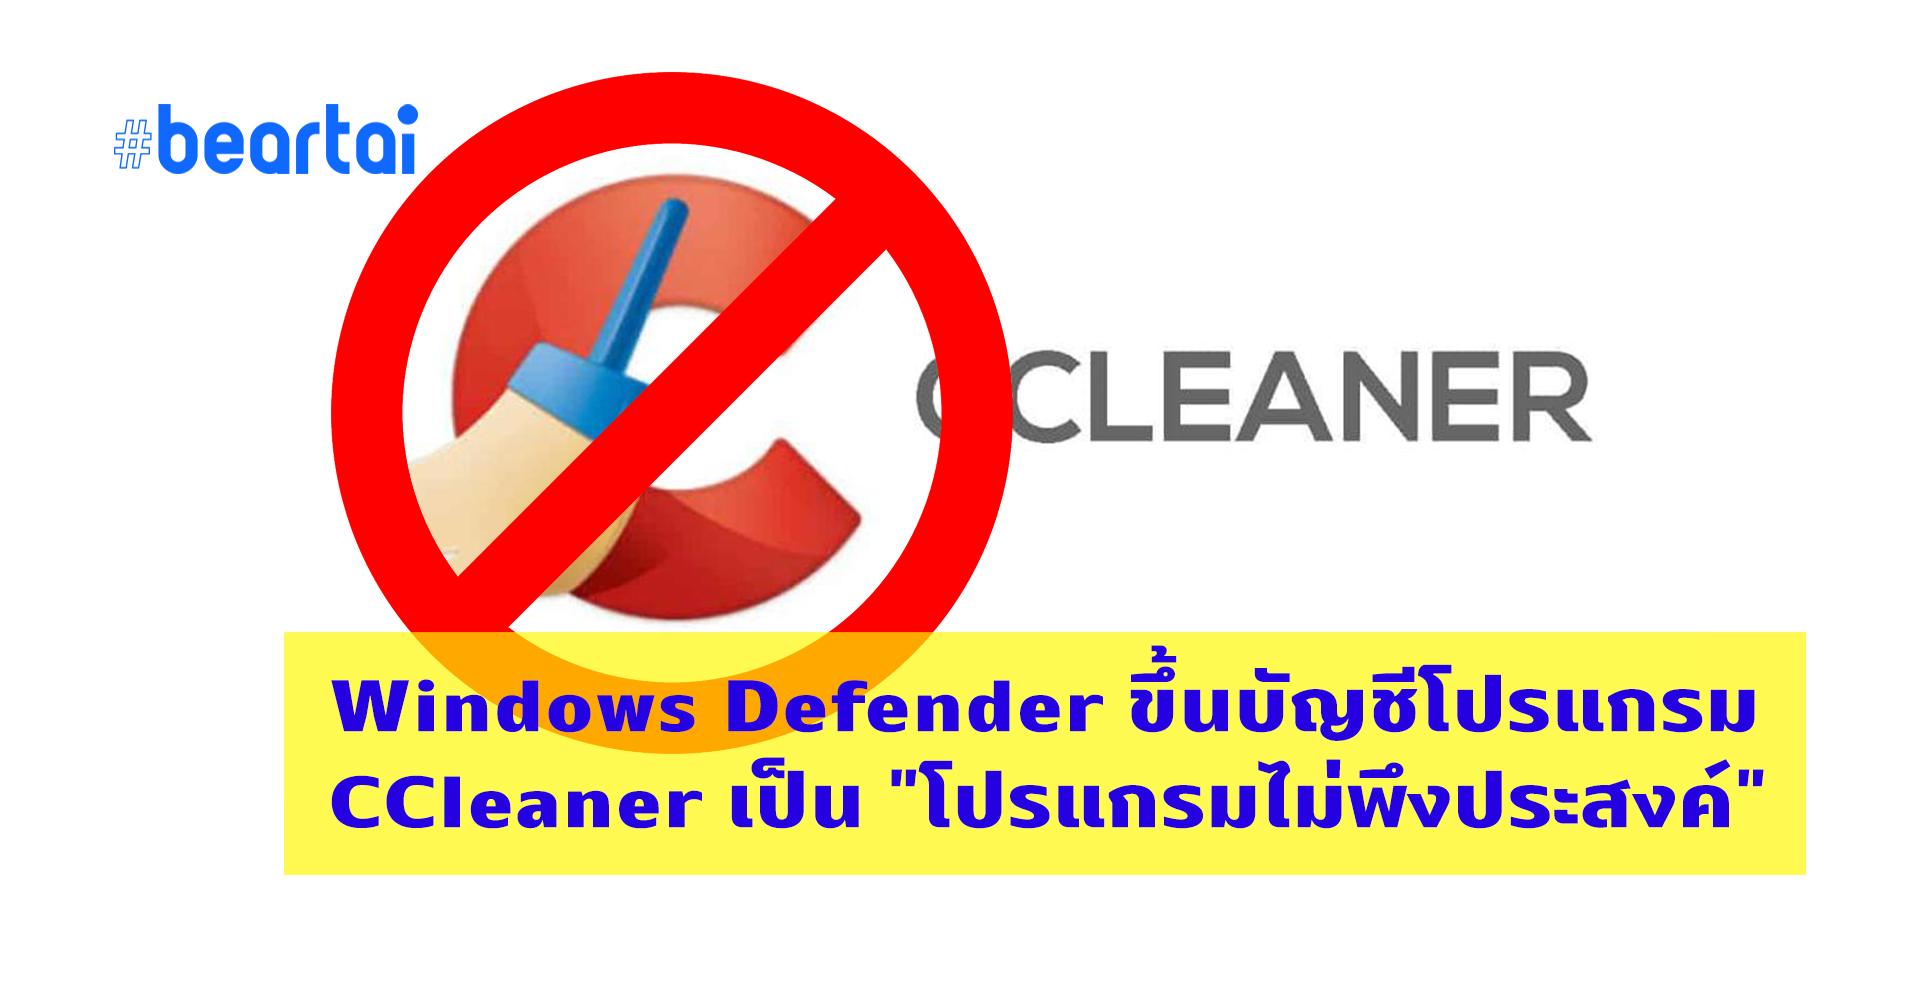 Windows Defender ขึ้นบัญชีโปรแกรม CCleaner เป็น “โปรแกรมไม่พึงประสงค์”